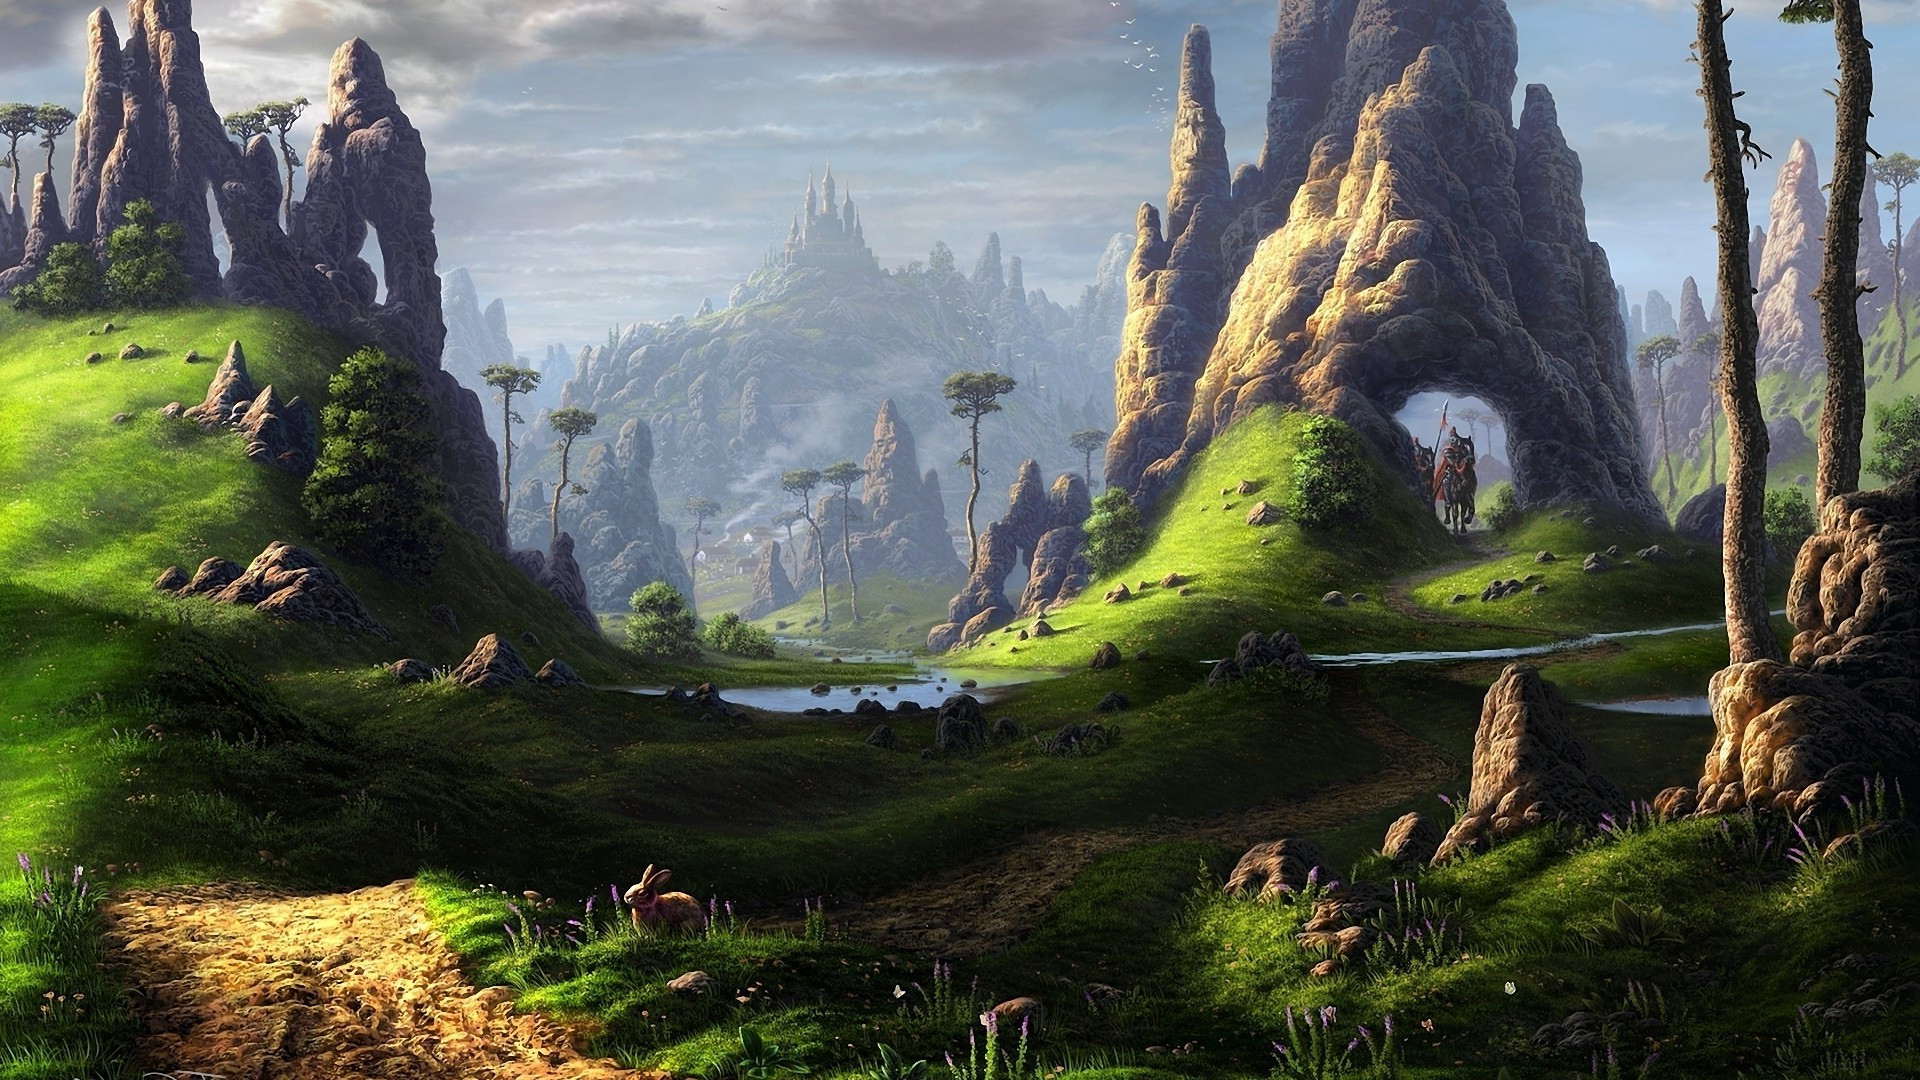 Best ideas about Fantasy Landscape Art
. Save or Pin fantasy Art Landscape Wallpapers HD Desktop and Mobile Now.